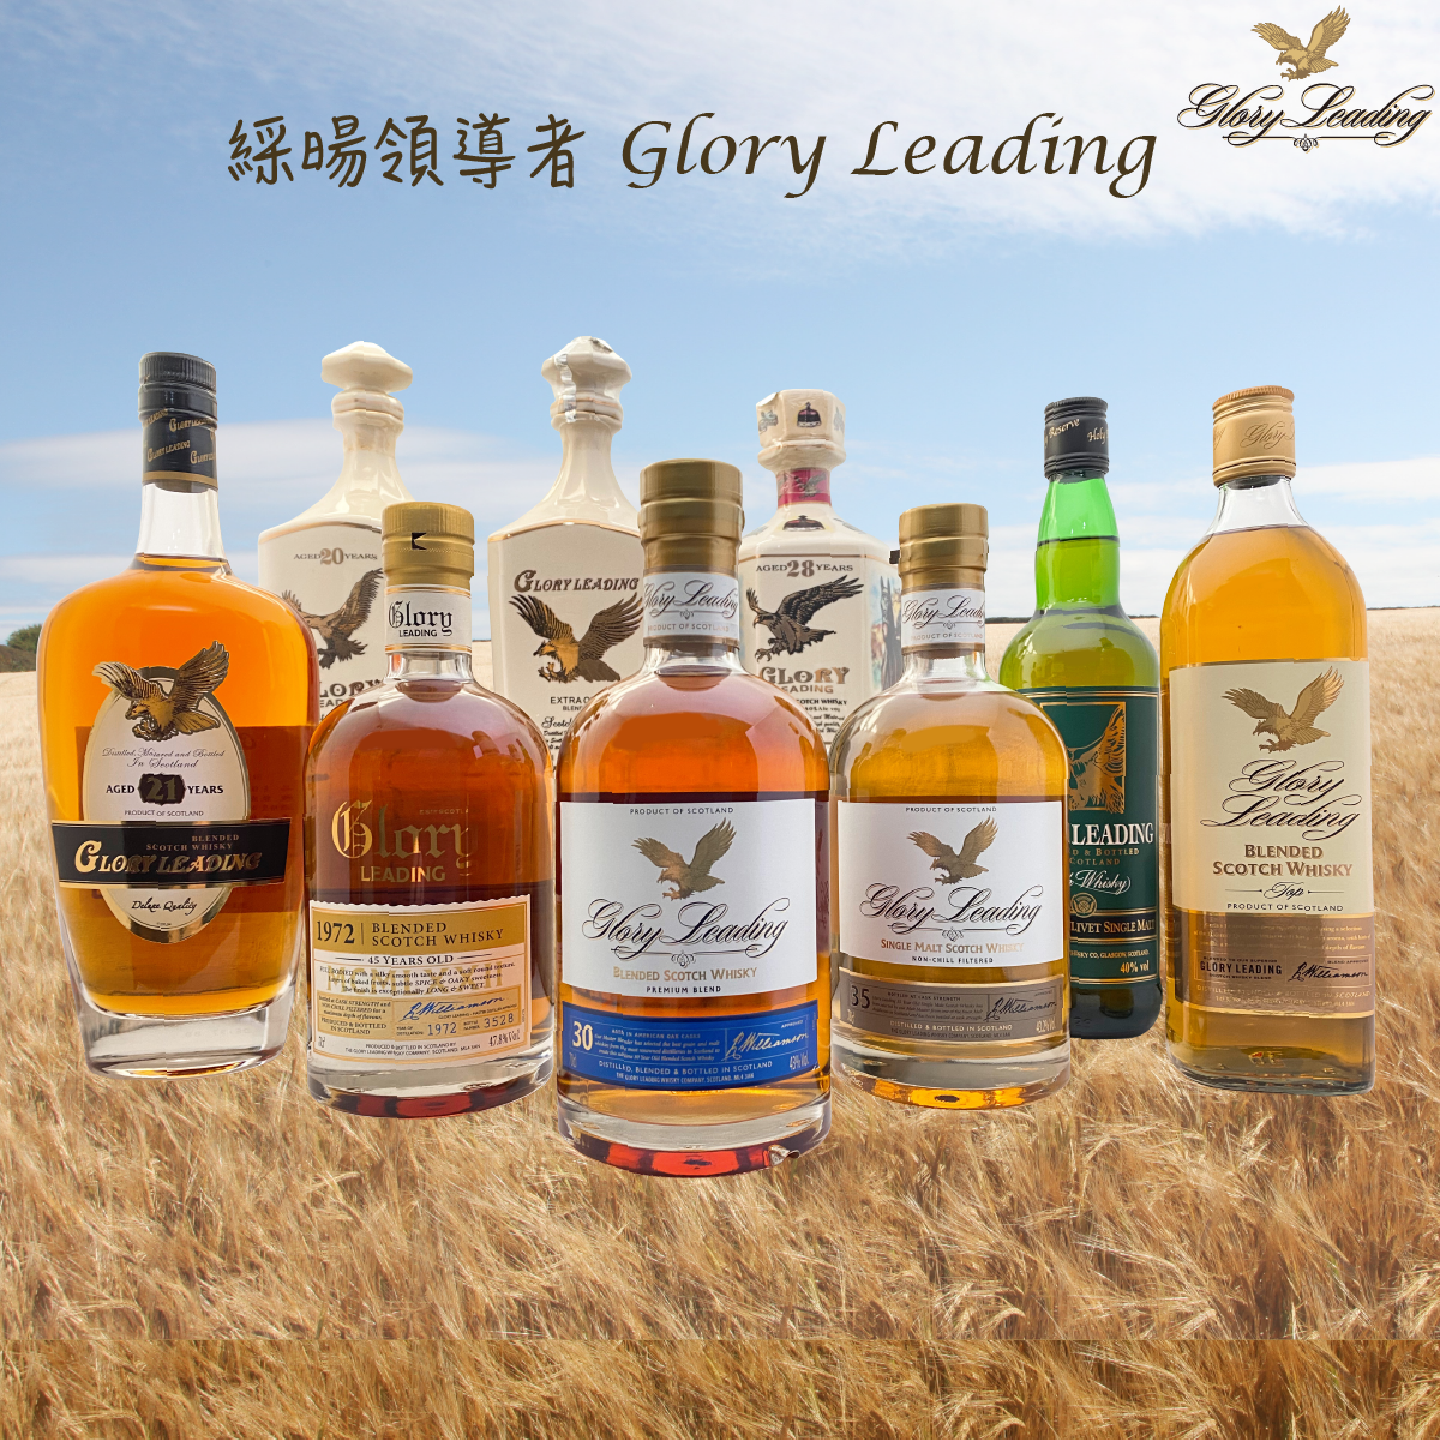 Glory Leading Scotch Whisky